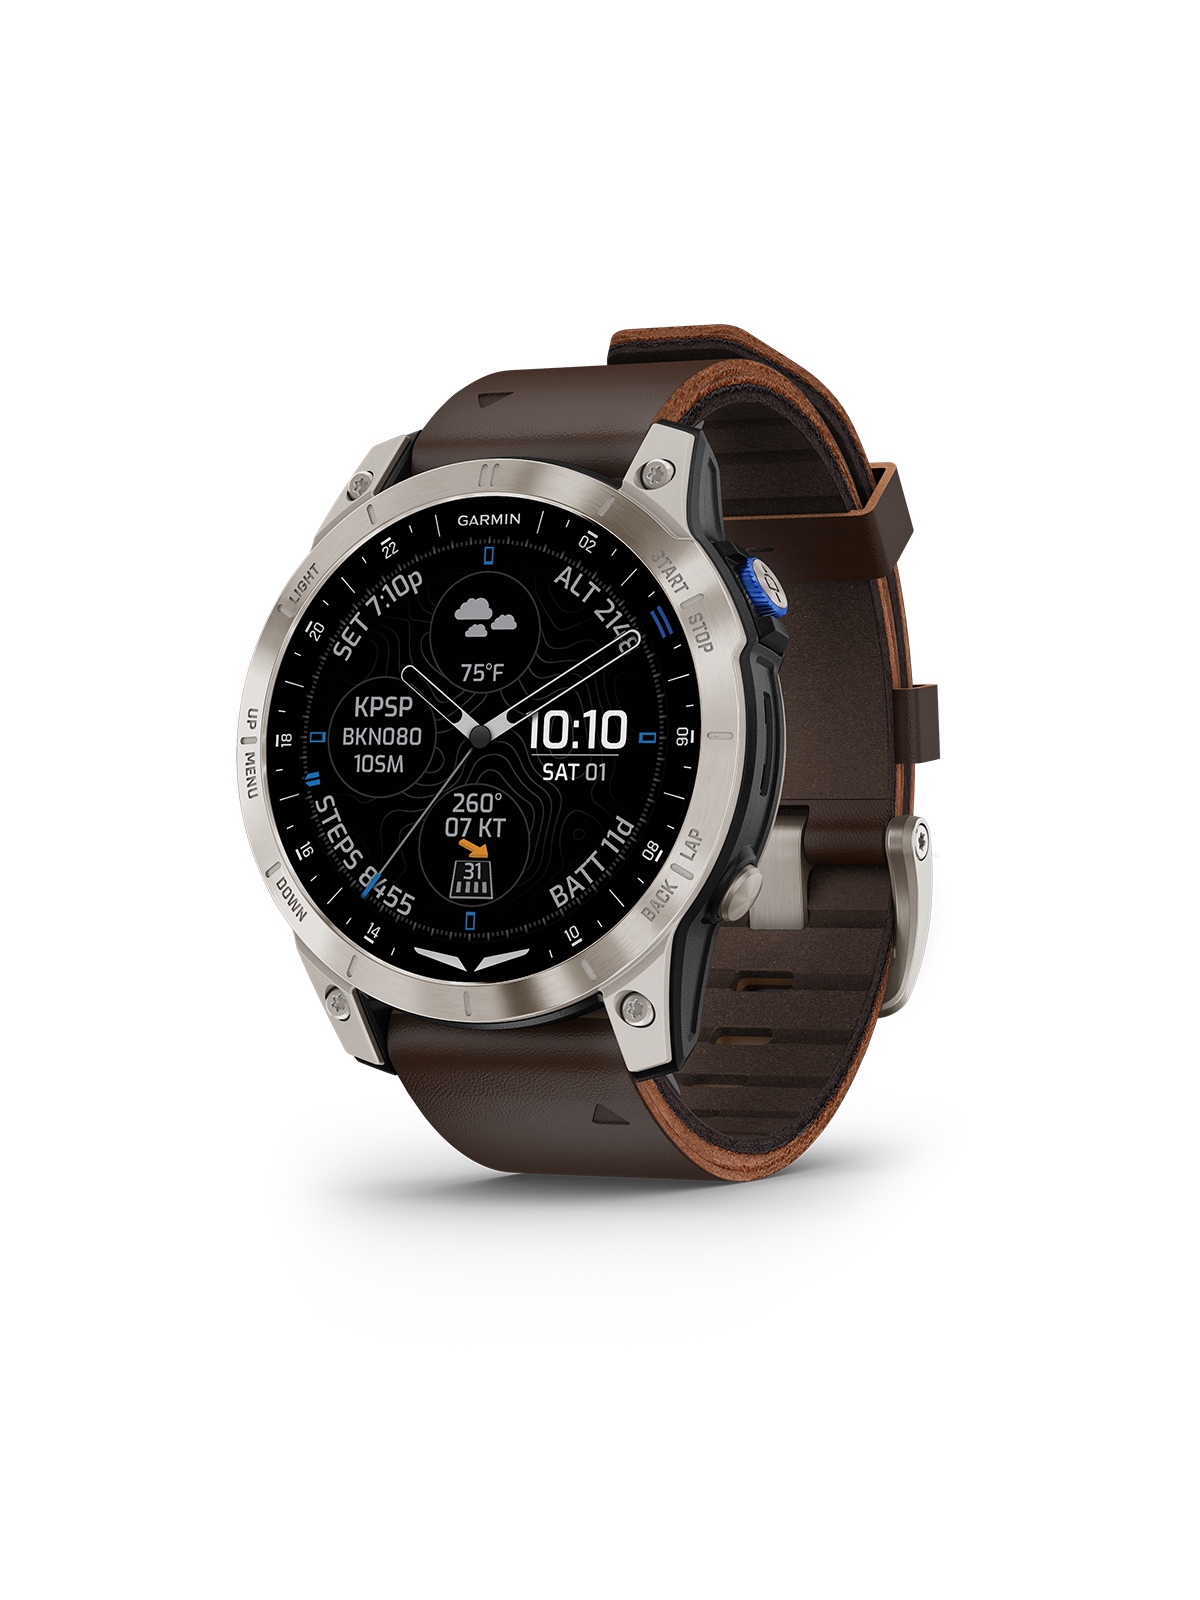 Garmin D2 Mach 1 Aviator Smartwatch - Leather Band (brown), 47 mm AMOLED Touchscreen Display